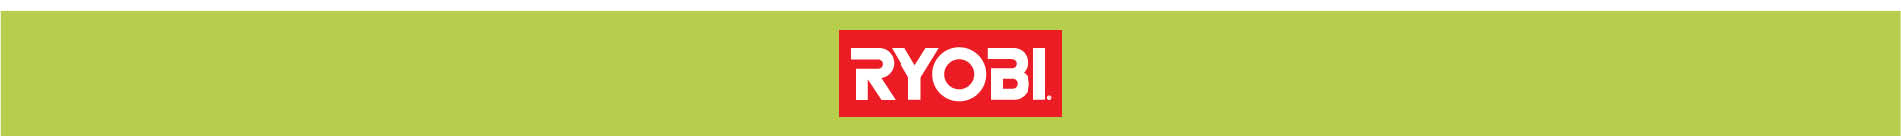 Ryobi Brand Banner